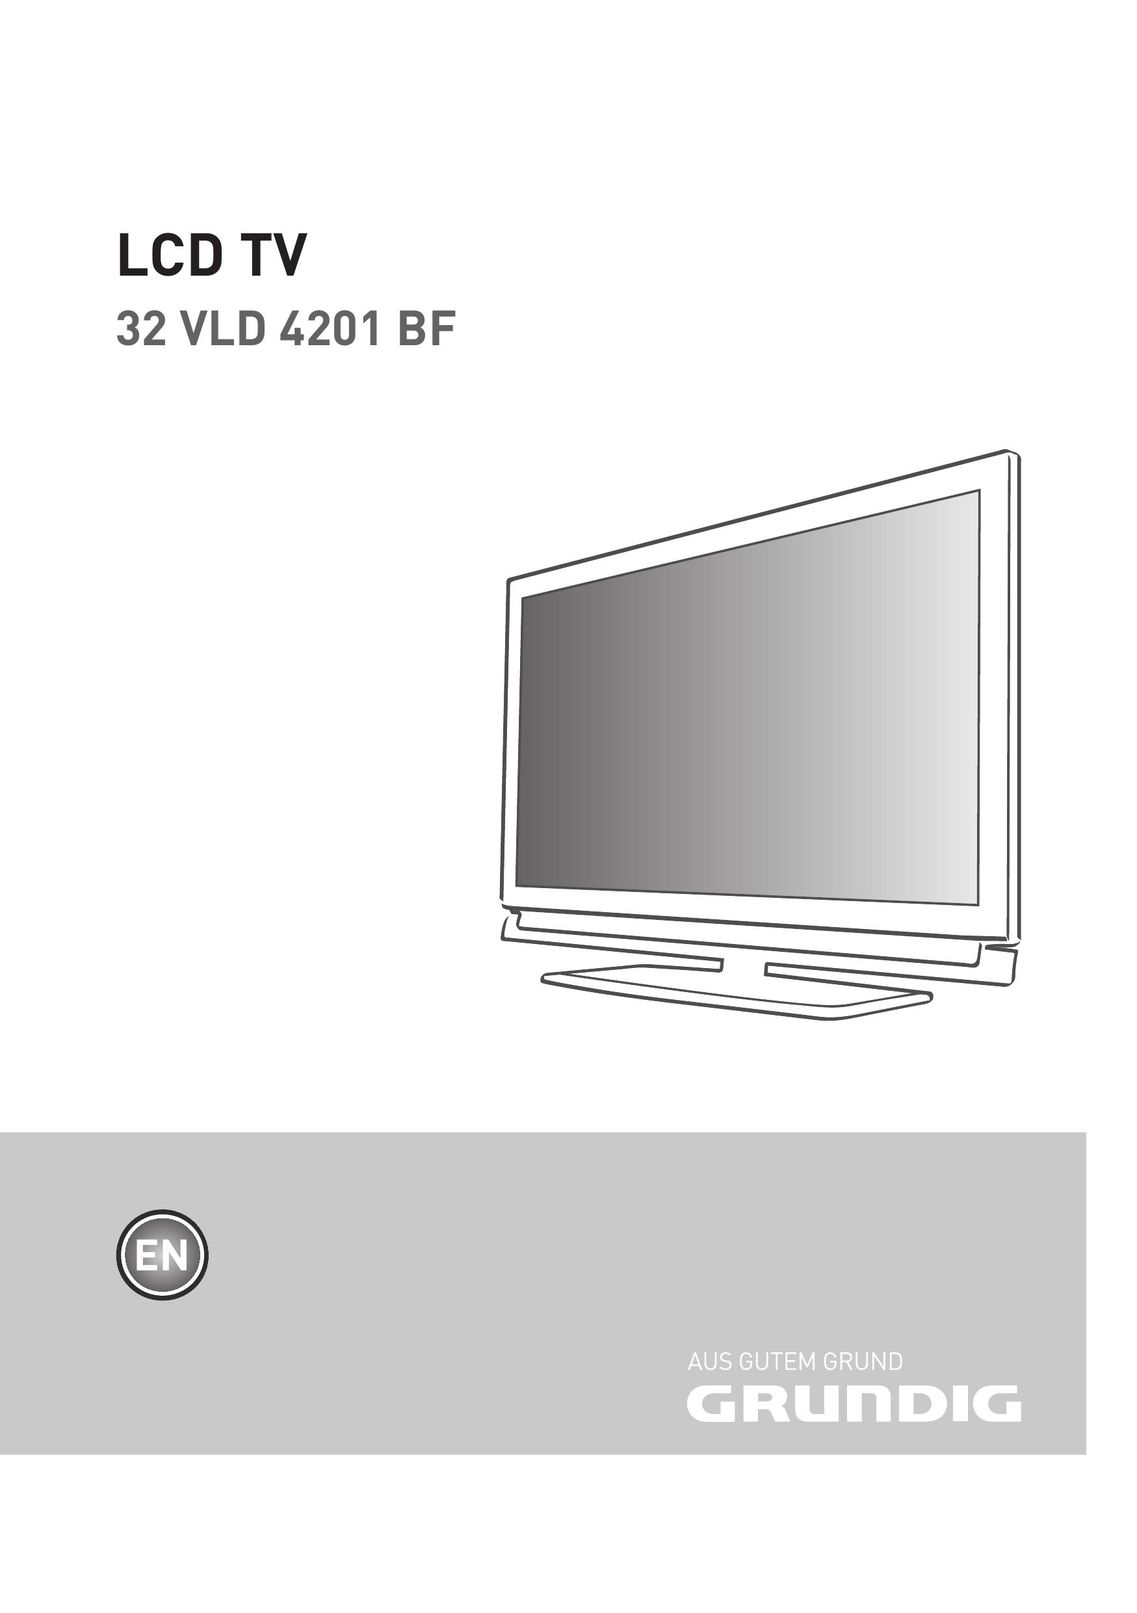 Grundig 32 VLD 4201 BF Flat Panel Television User Manual